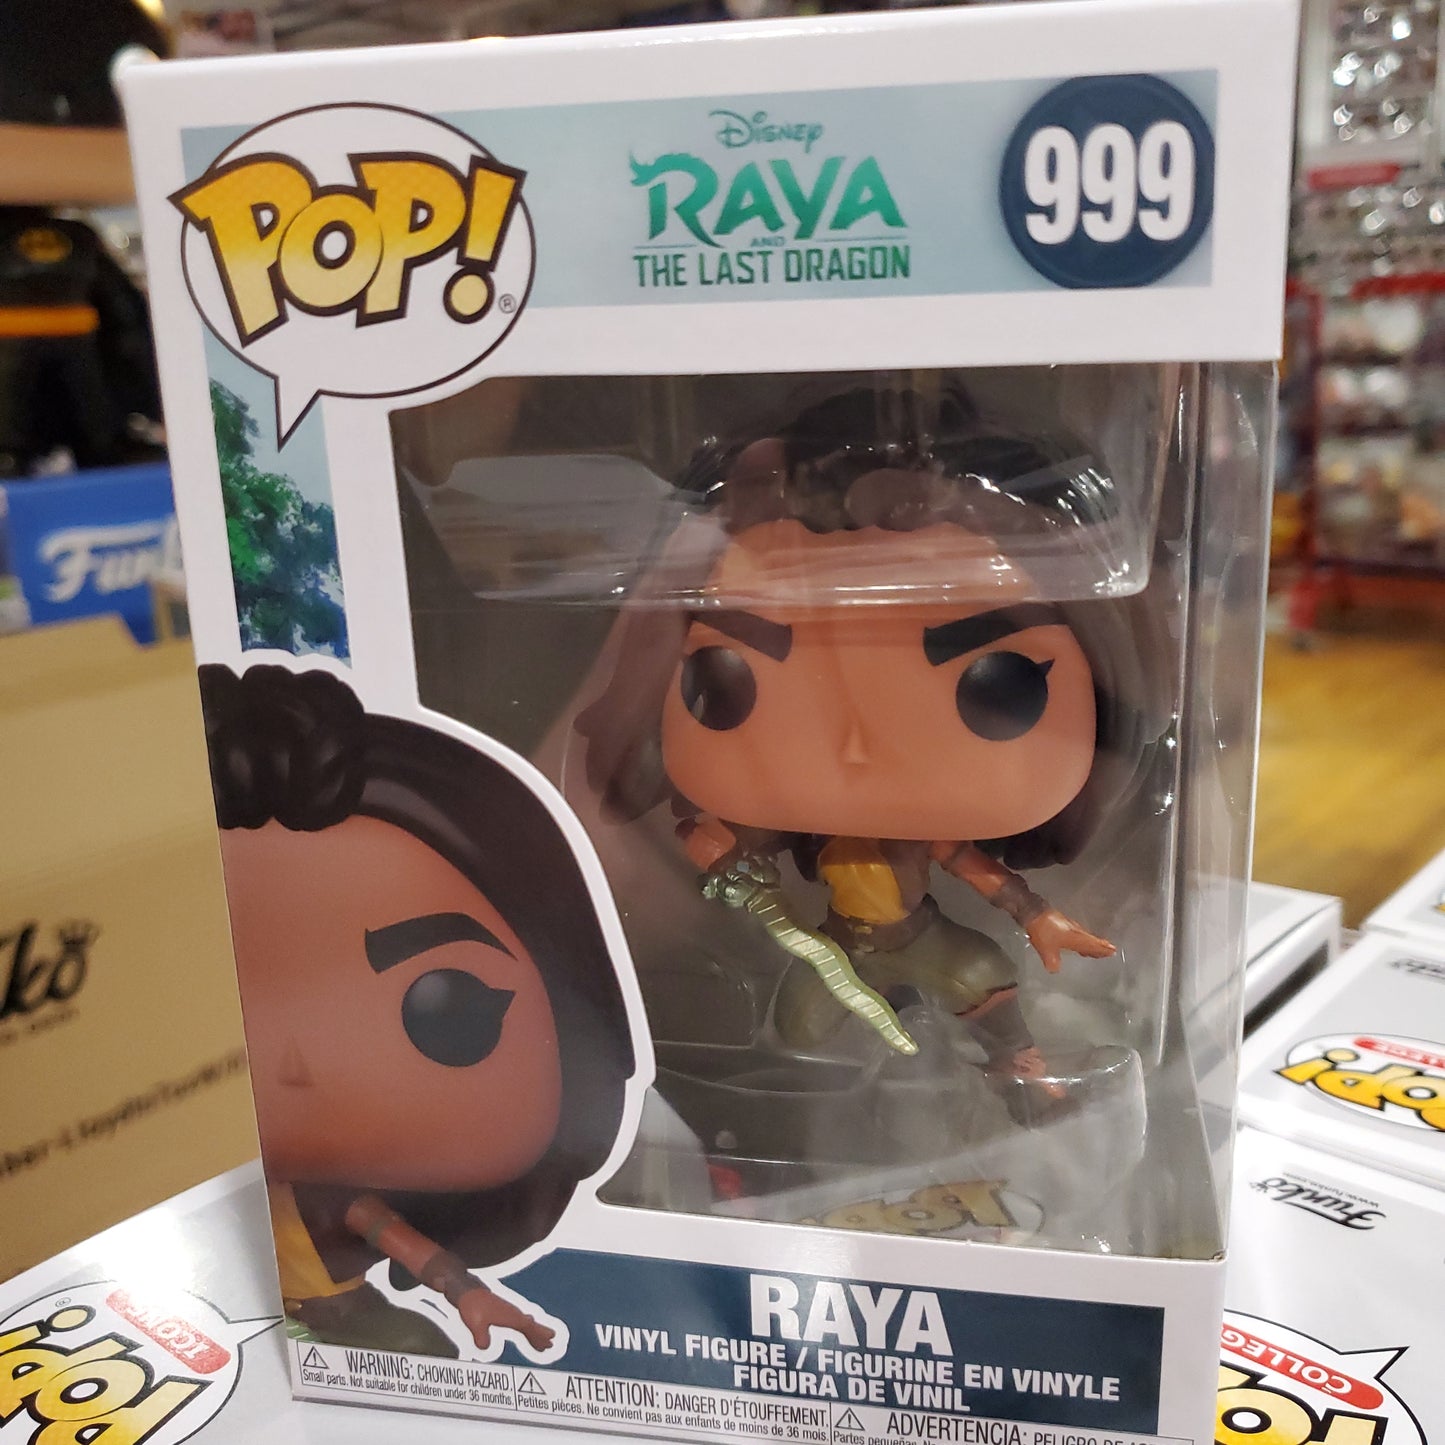 Raya 999 Funko Pop! Vinyl Figure Disney Raya and the Last Dragon